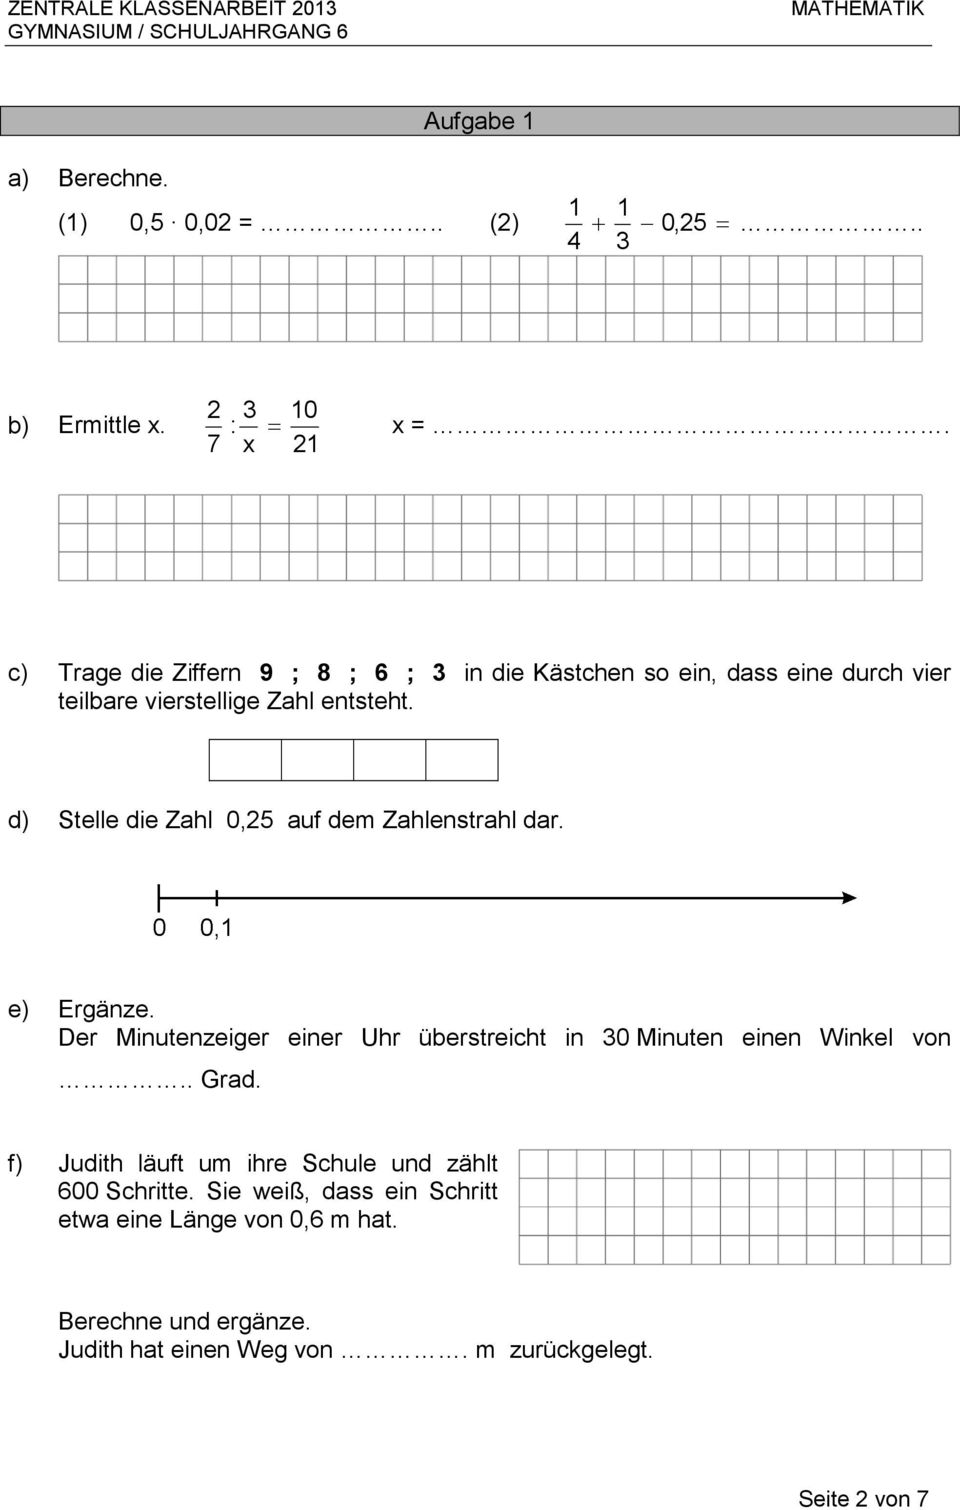 Zentrale Klassenarbeit 2013 Gymnasium Mathematik Schuljahrgang 6 Pdf Free Download